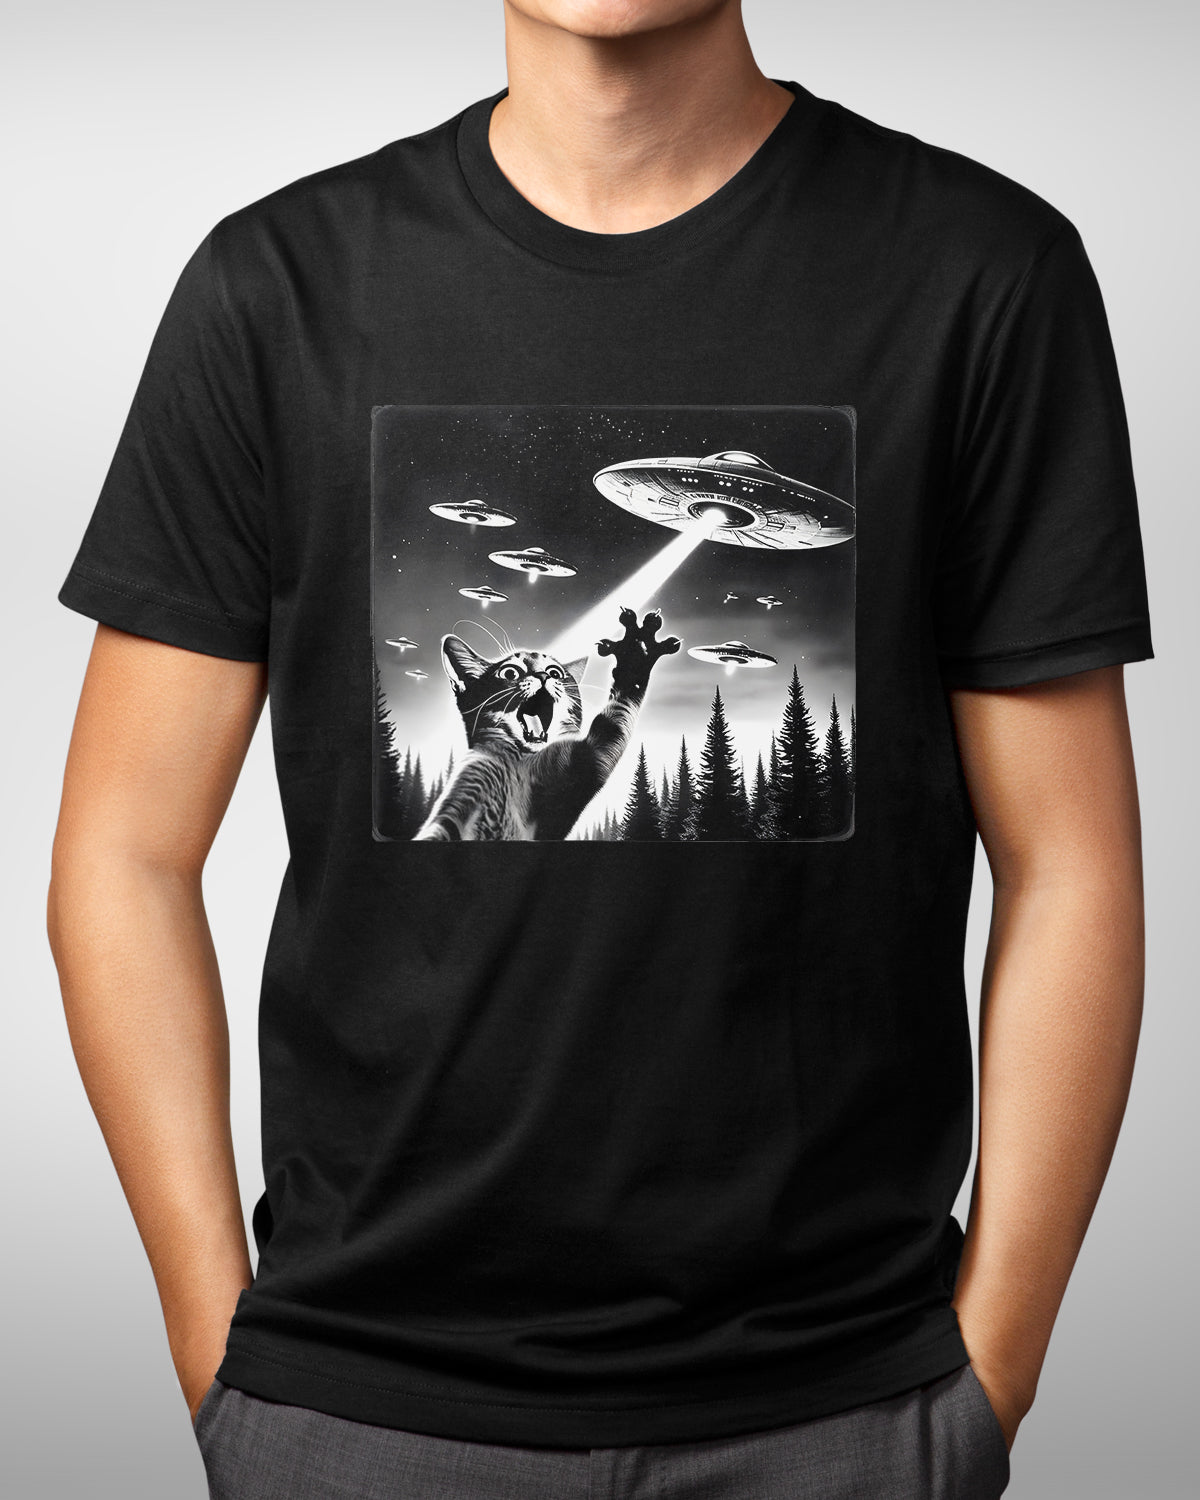 Funny Cat UFO Shirt - Flying Saucer - Alien Spaceship Aircraft - Cat Selfie Shirt